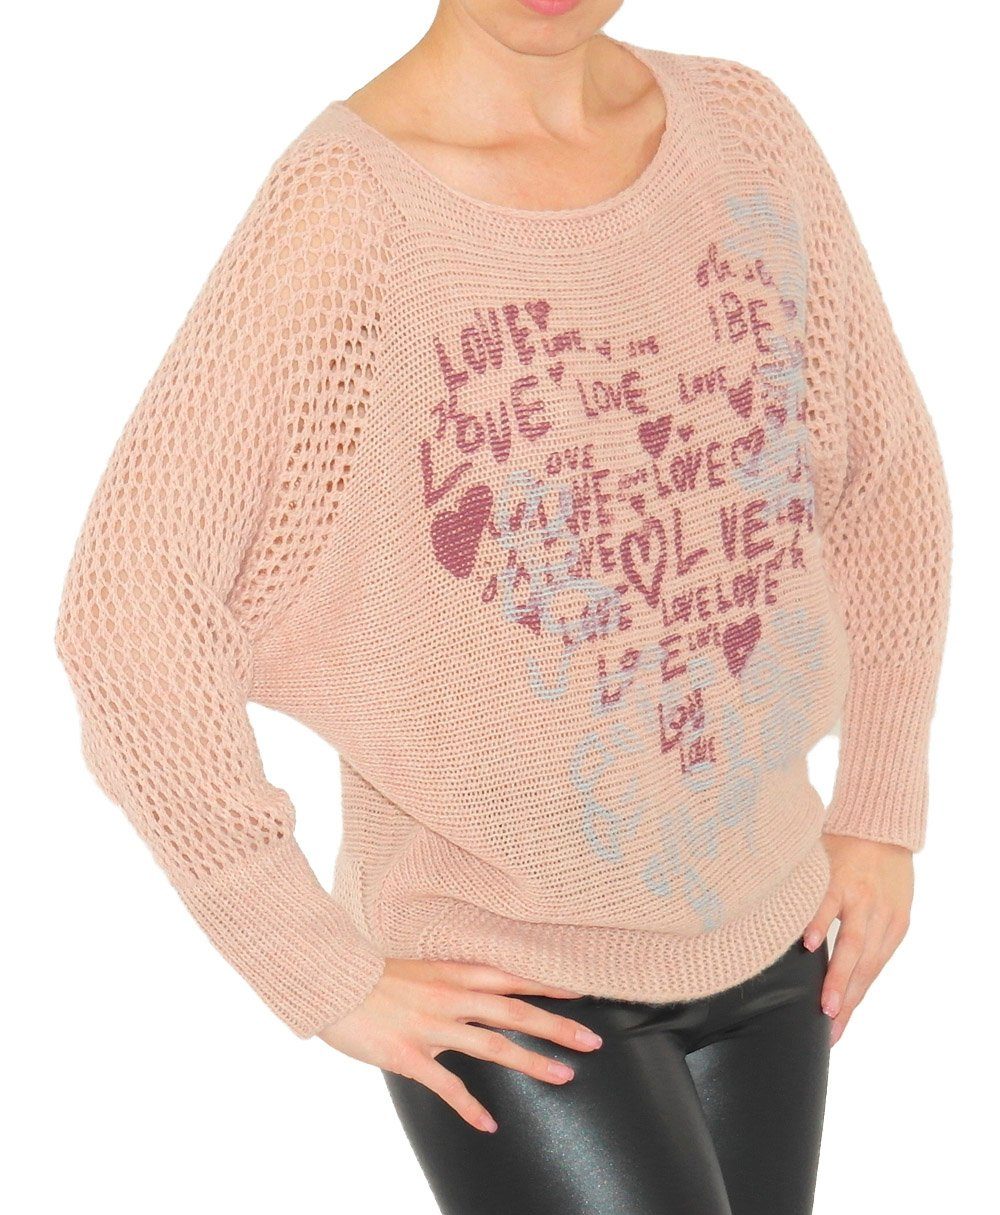 YESET Longpullover Pullover Strick Pulli Love-Blumen Top-Netz leicht Wolle rosa